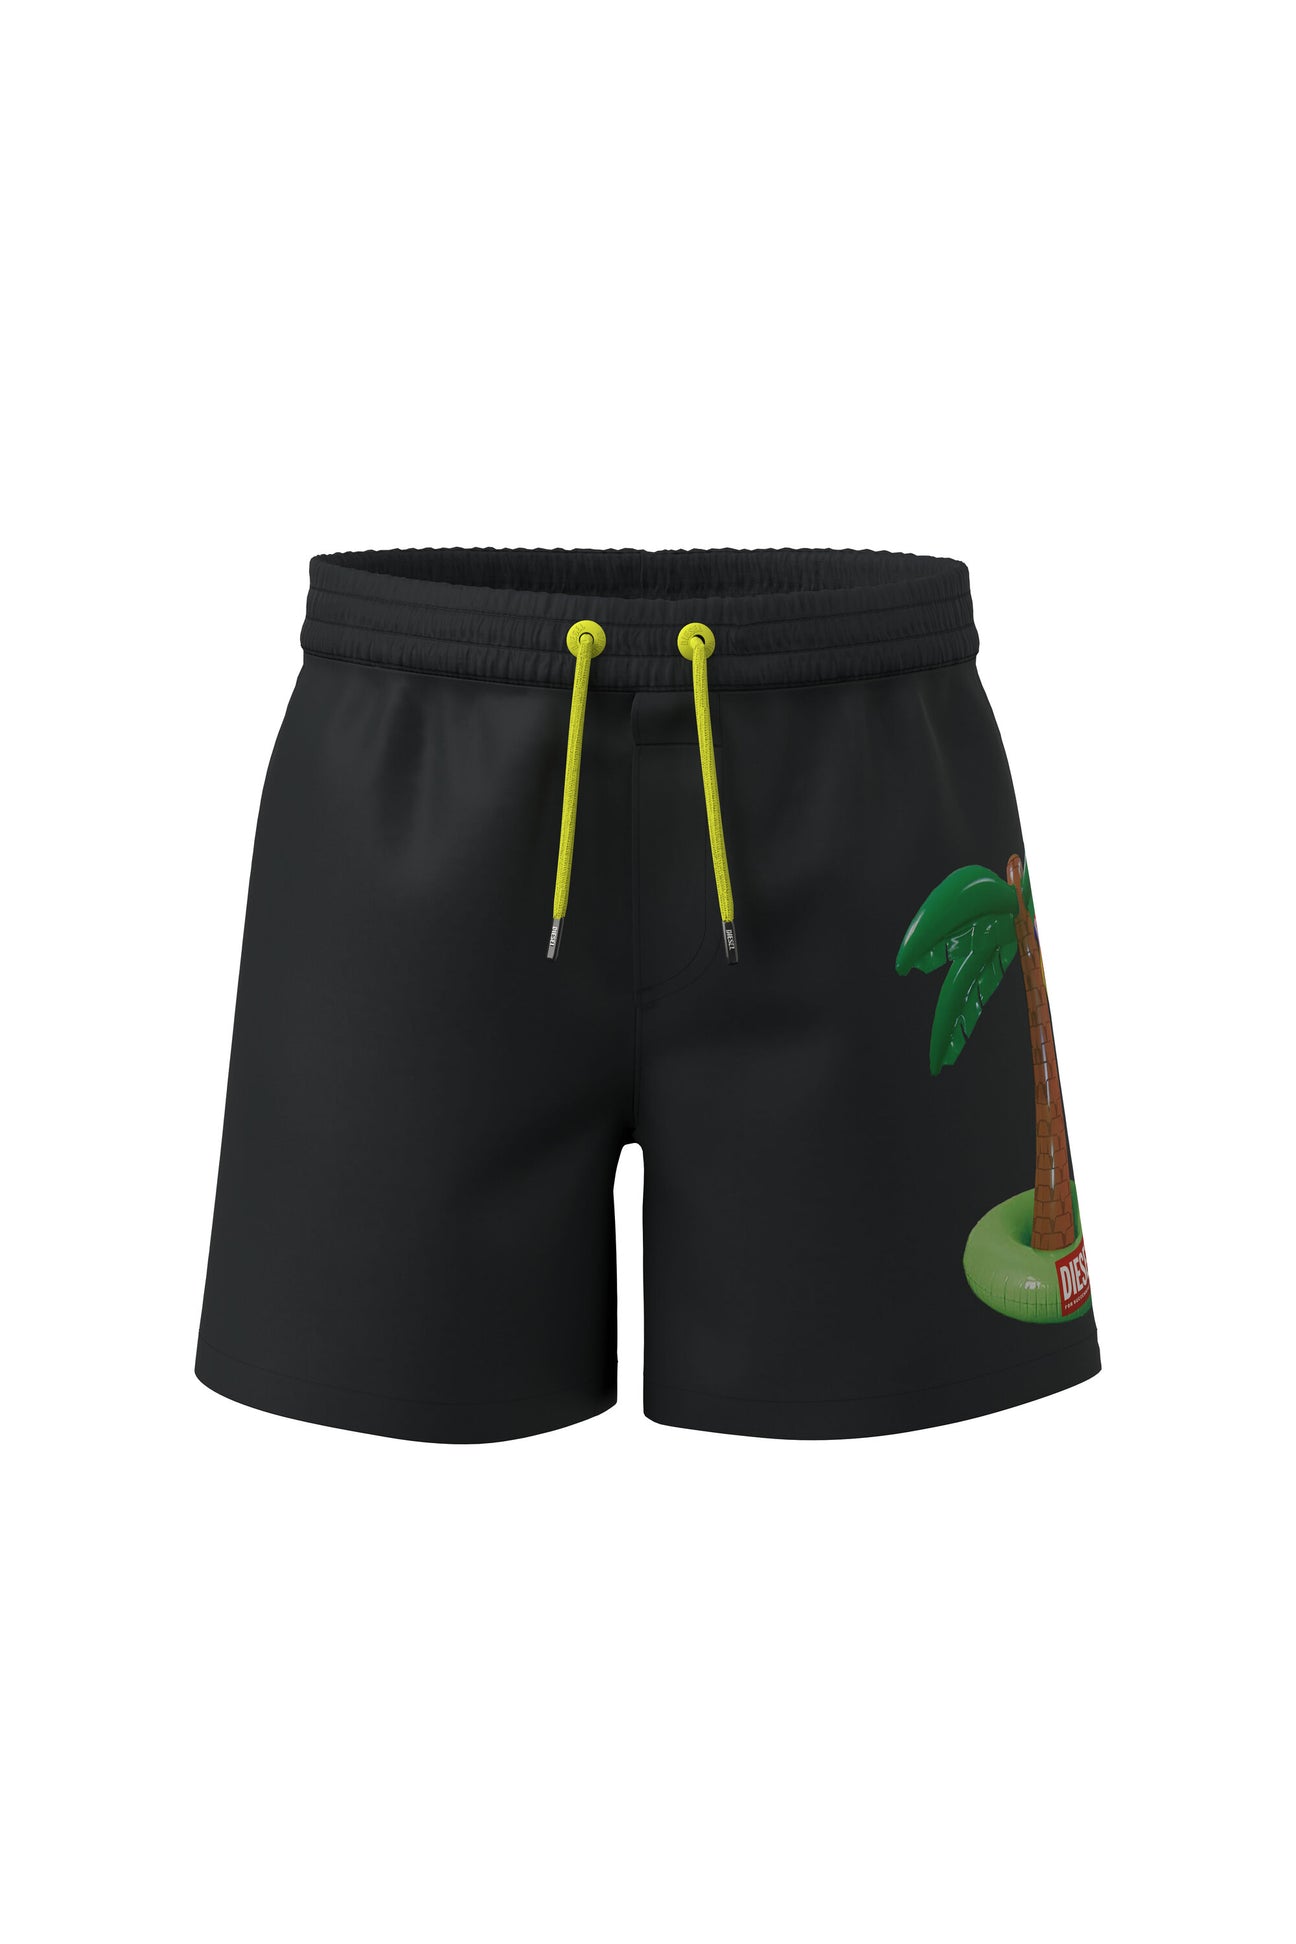 Black boxer shorts with palm tree print Black boxer shorts with palm tree print